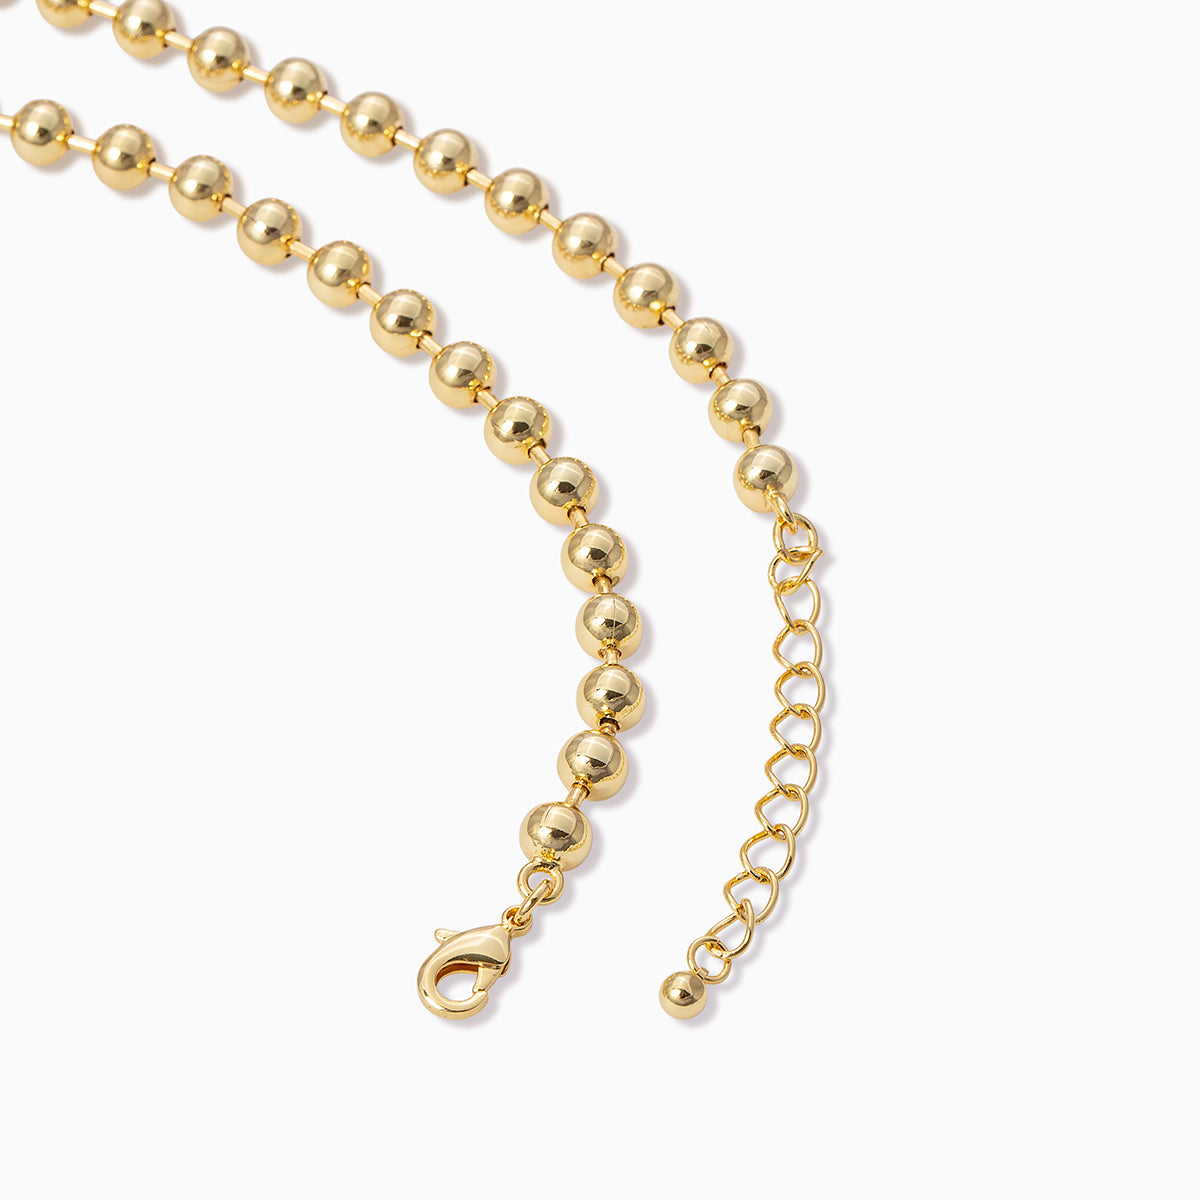 Antique Gold balls Necklace | Fashionworldhub